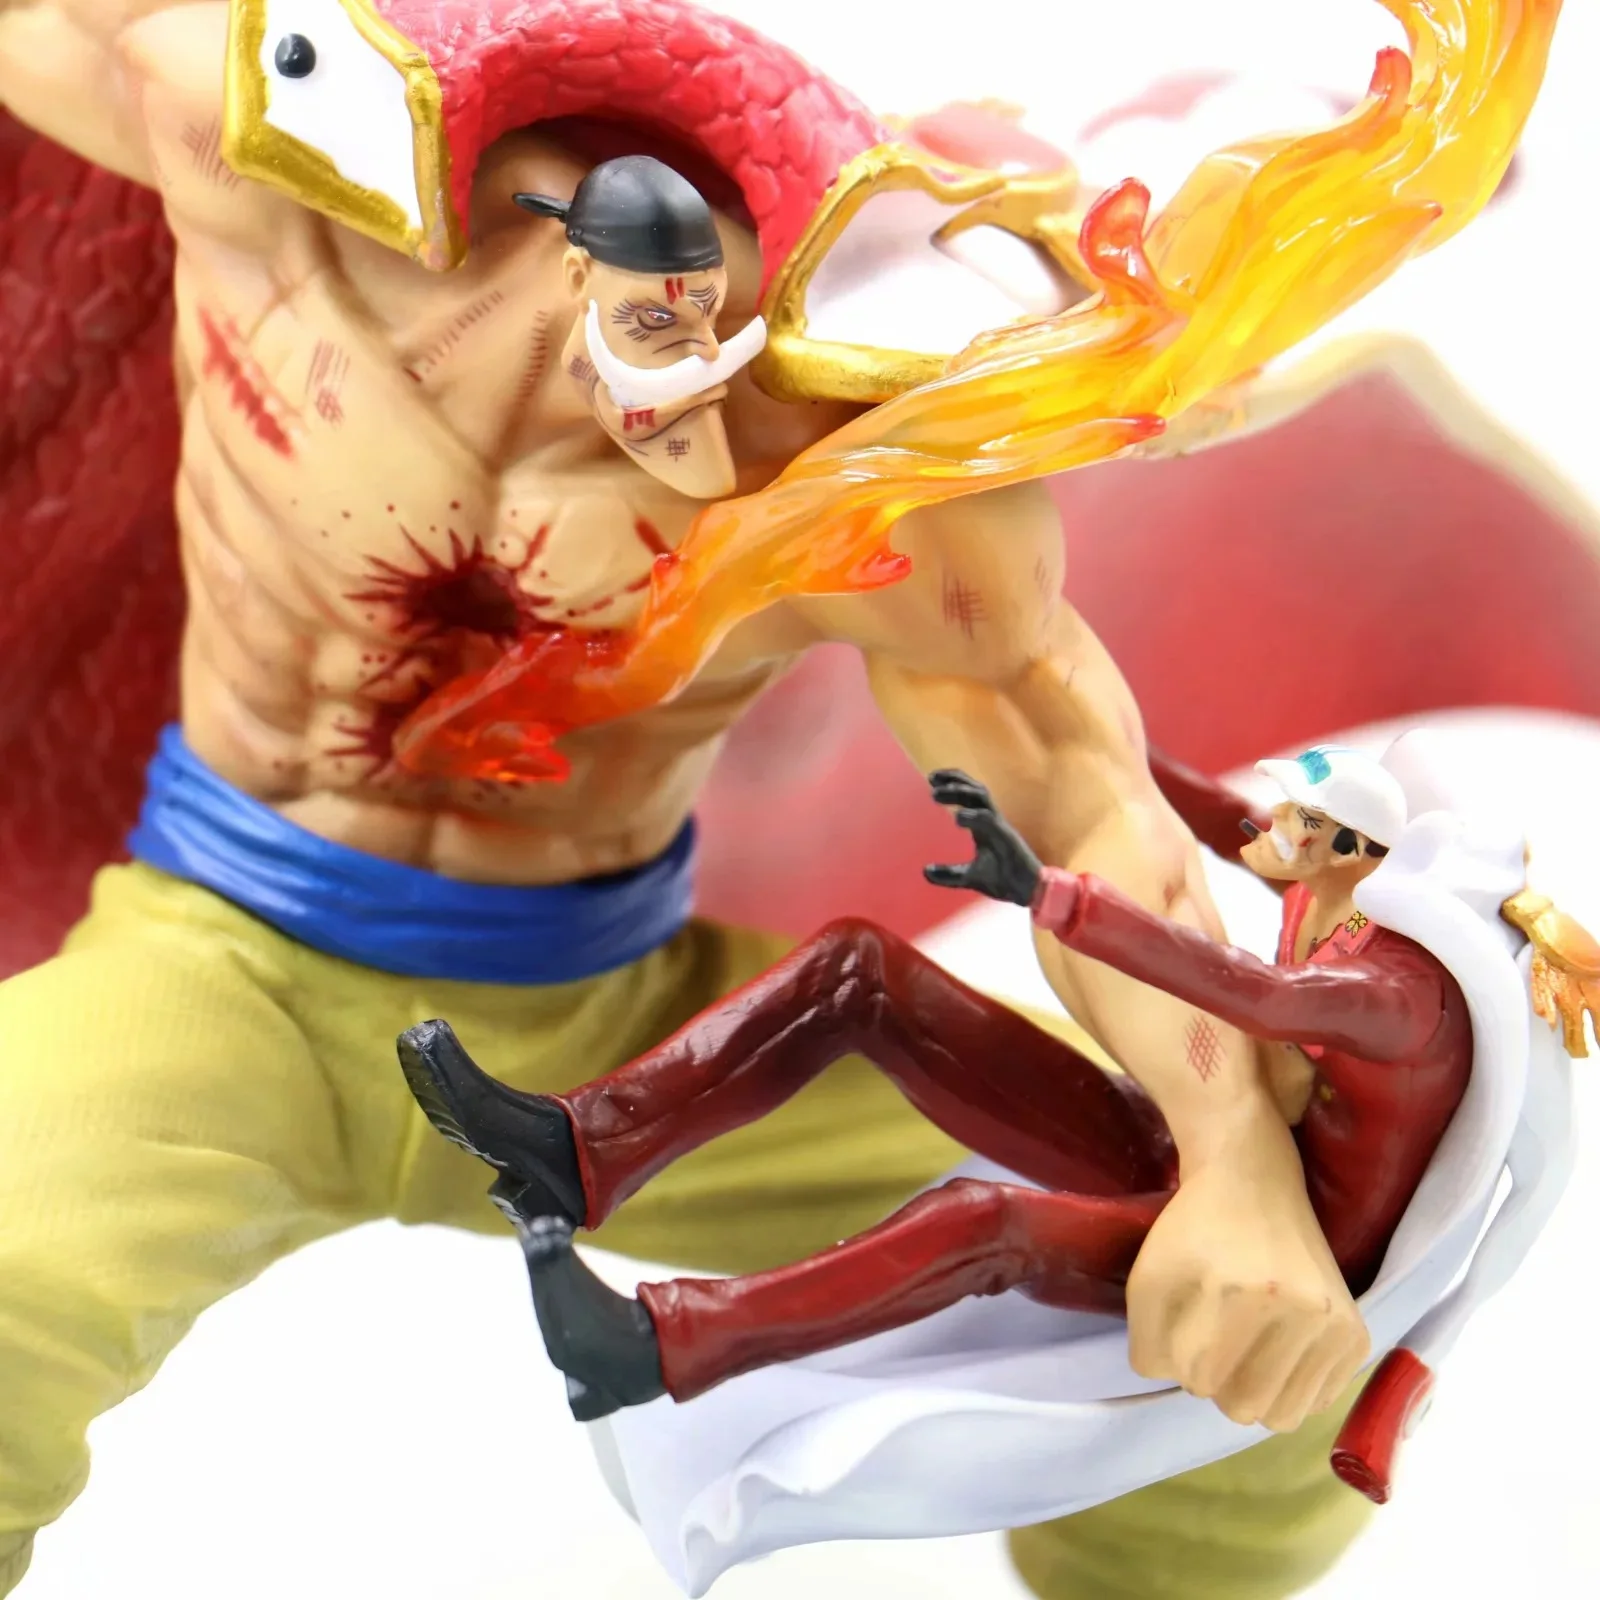 Anime One Piece Whitebeard Pirates Edward Newgate Battle Vs Sakazuki Gk Statue Action Figure Model Toys Buy At The Price Of 34 99 In Aliexpress Com Imall Com